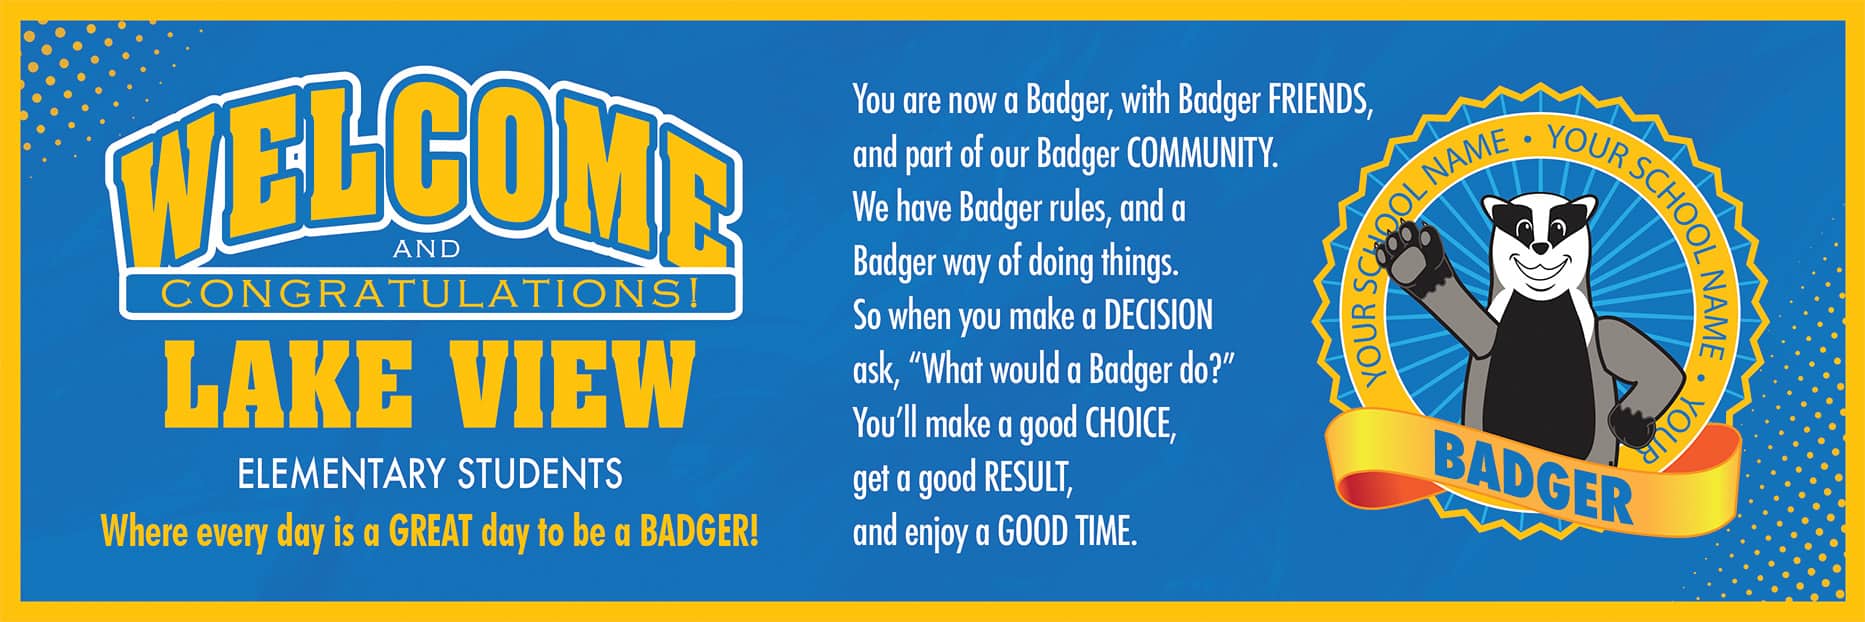 welcome-message-banner-badger